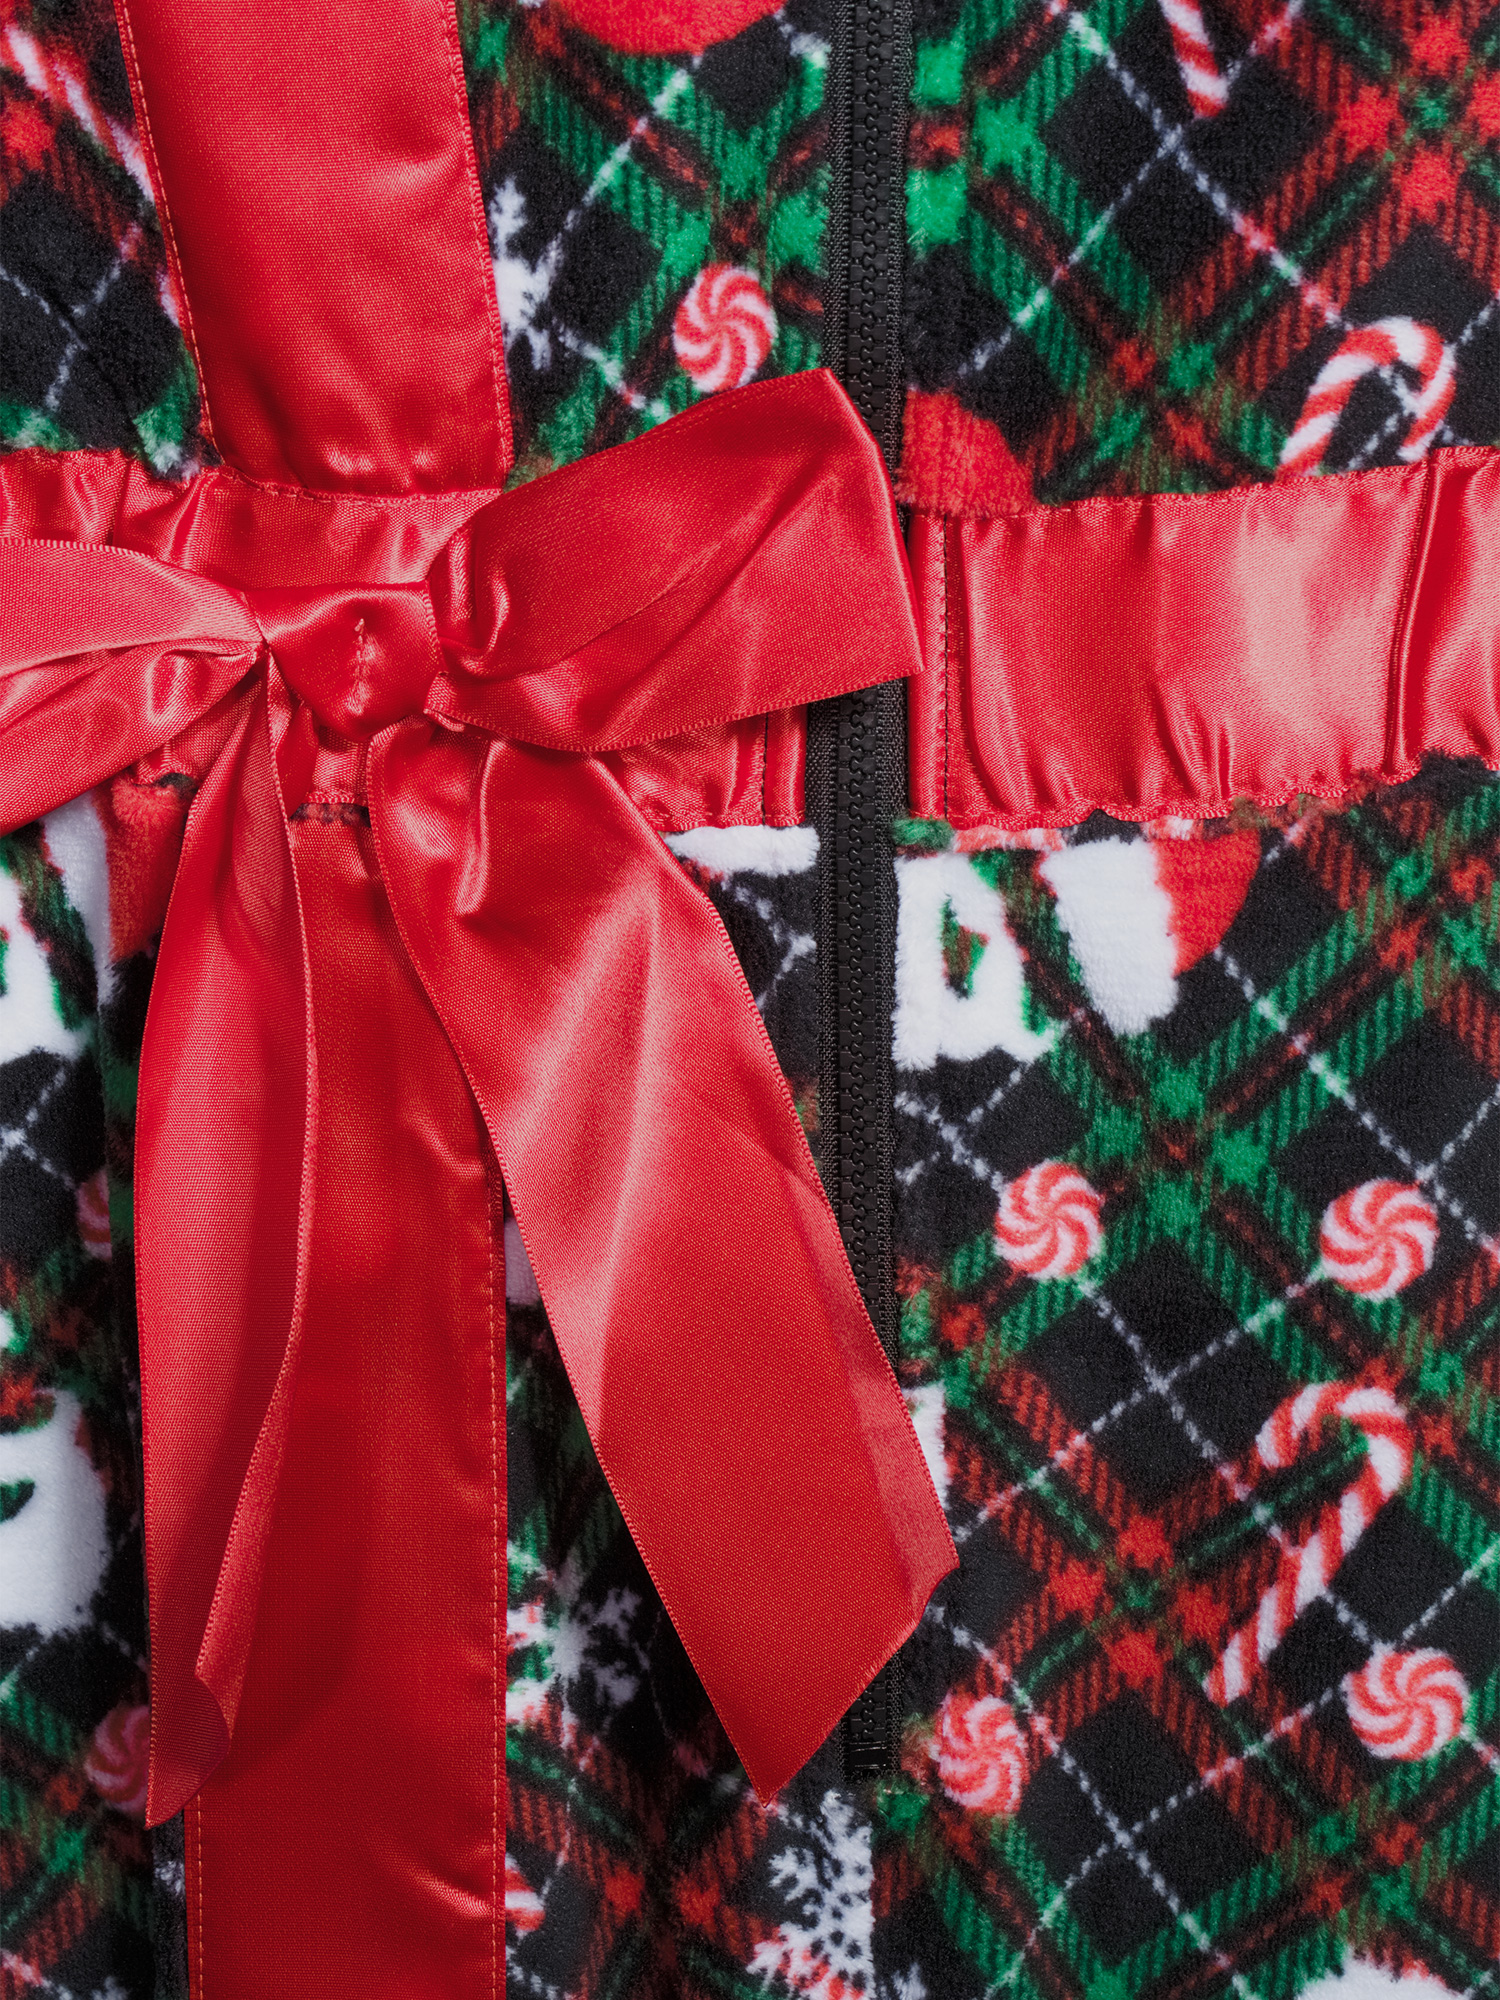 Derek Heart Women's and Women's Plus Christmas Present Pajamas Union Suit - image 4 of 6